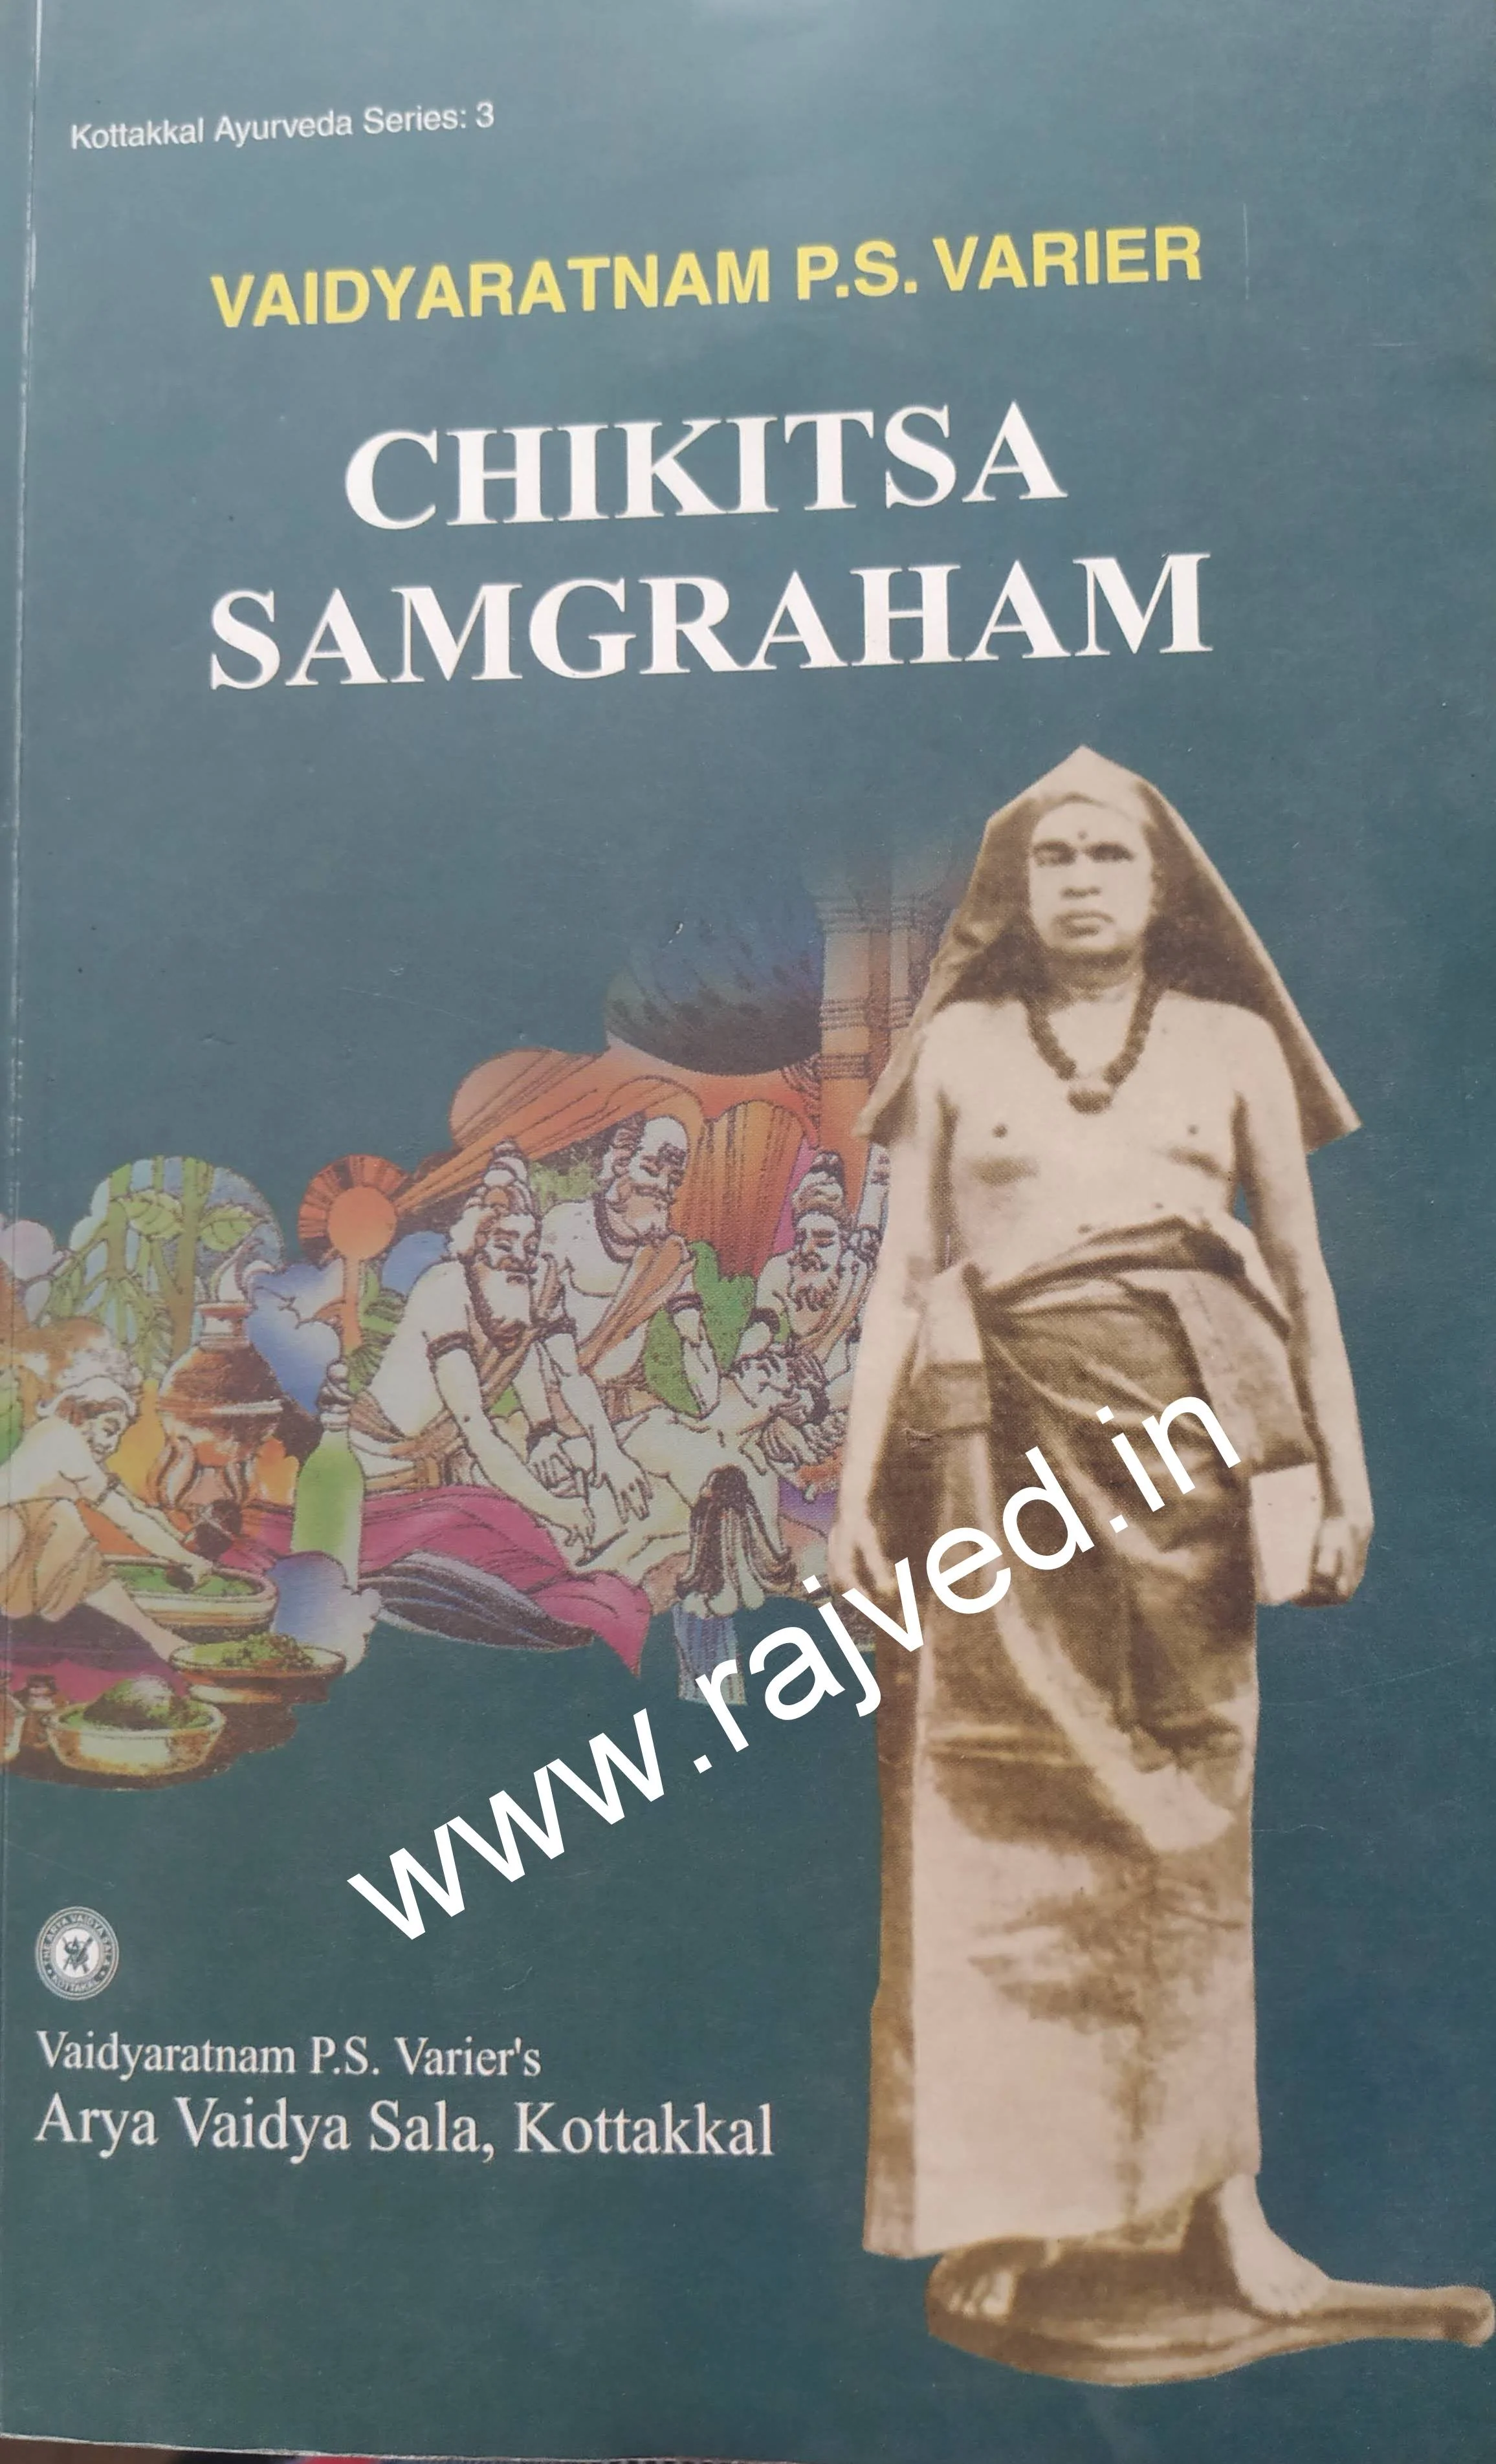 chikitsa samgraham by vaidyaratnam P.S.varier's,arya vaidya sala english version